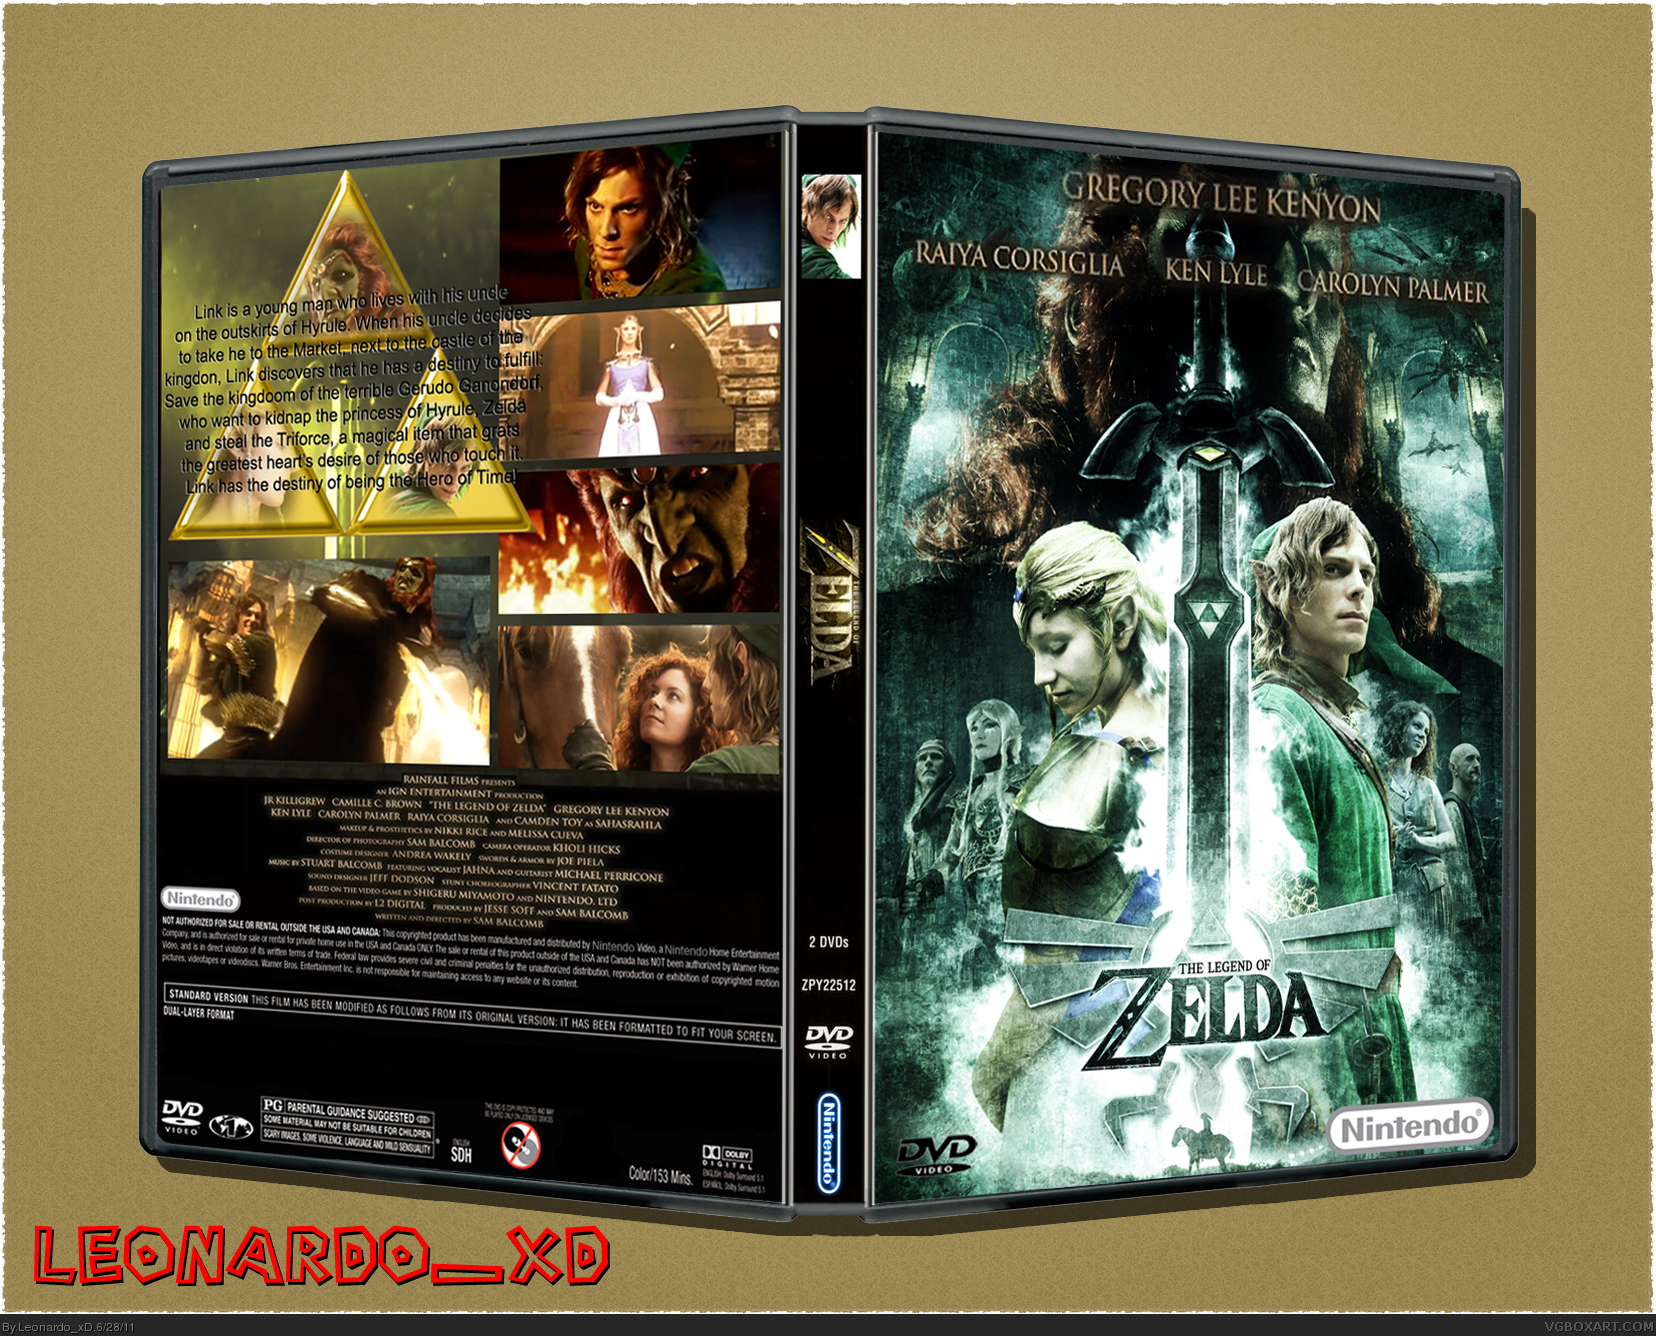 The Legend Of Zelda box cover